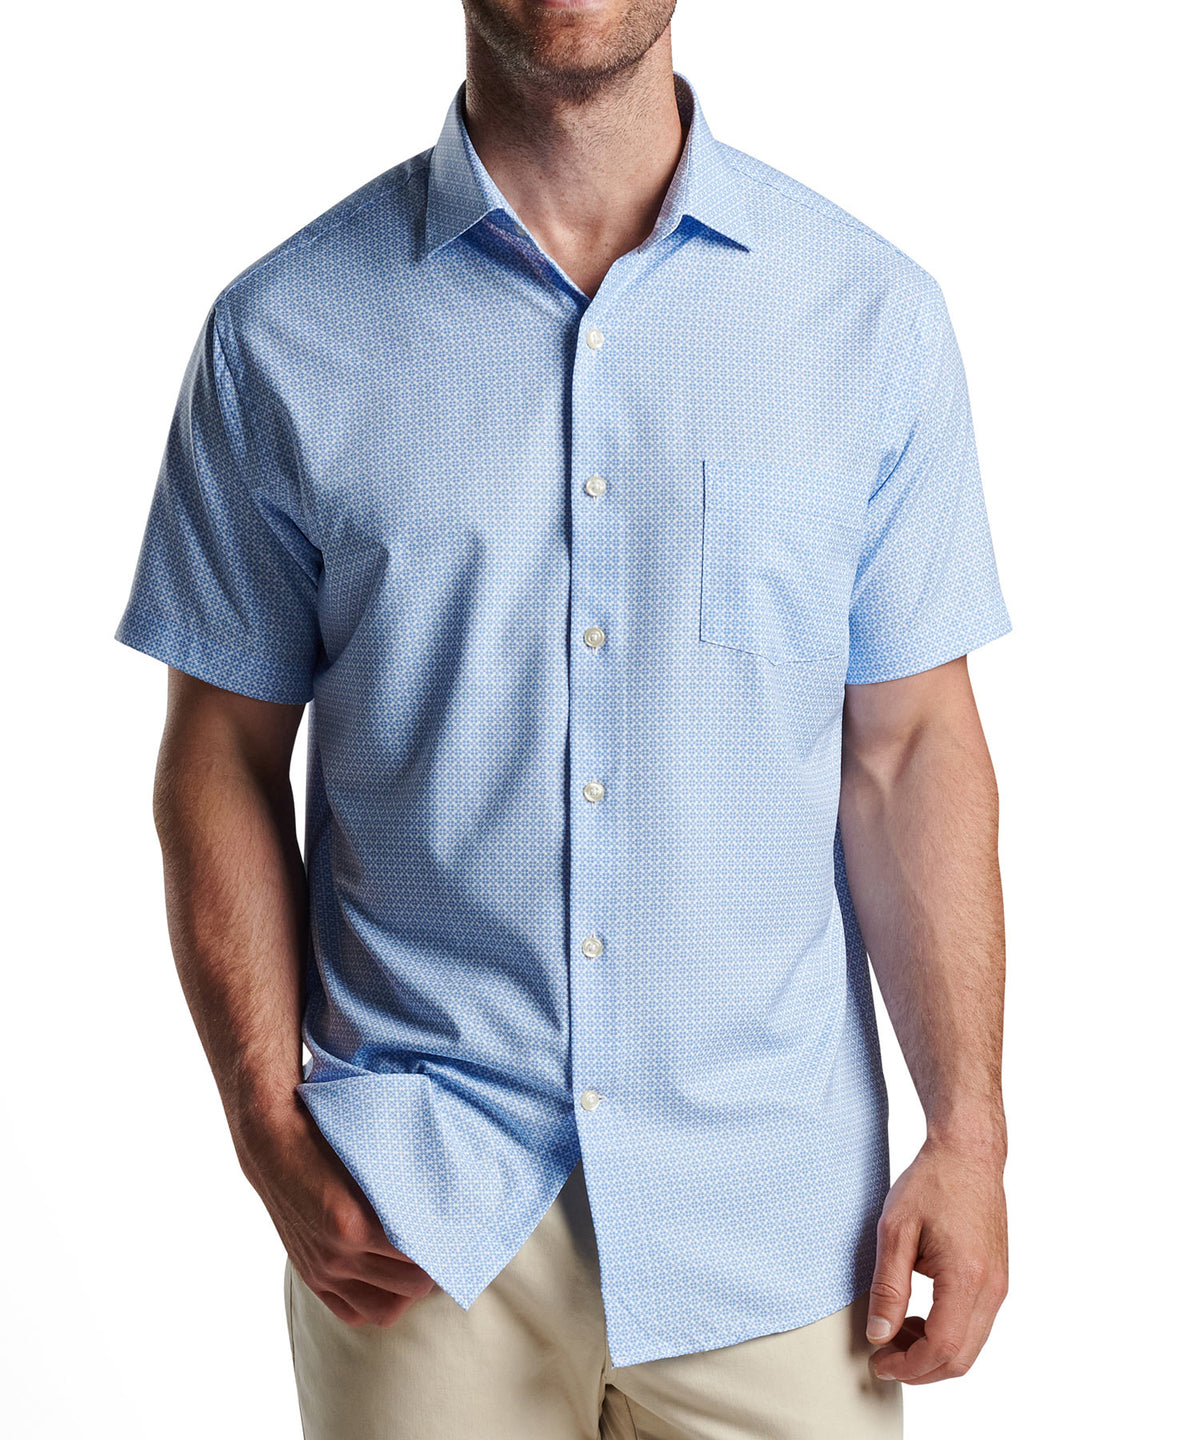 Peter Millar Geo Print Short Sleeve Spread Collar Sport Shirt, Big & Tall